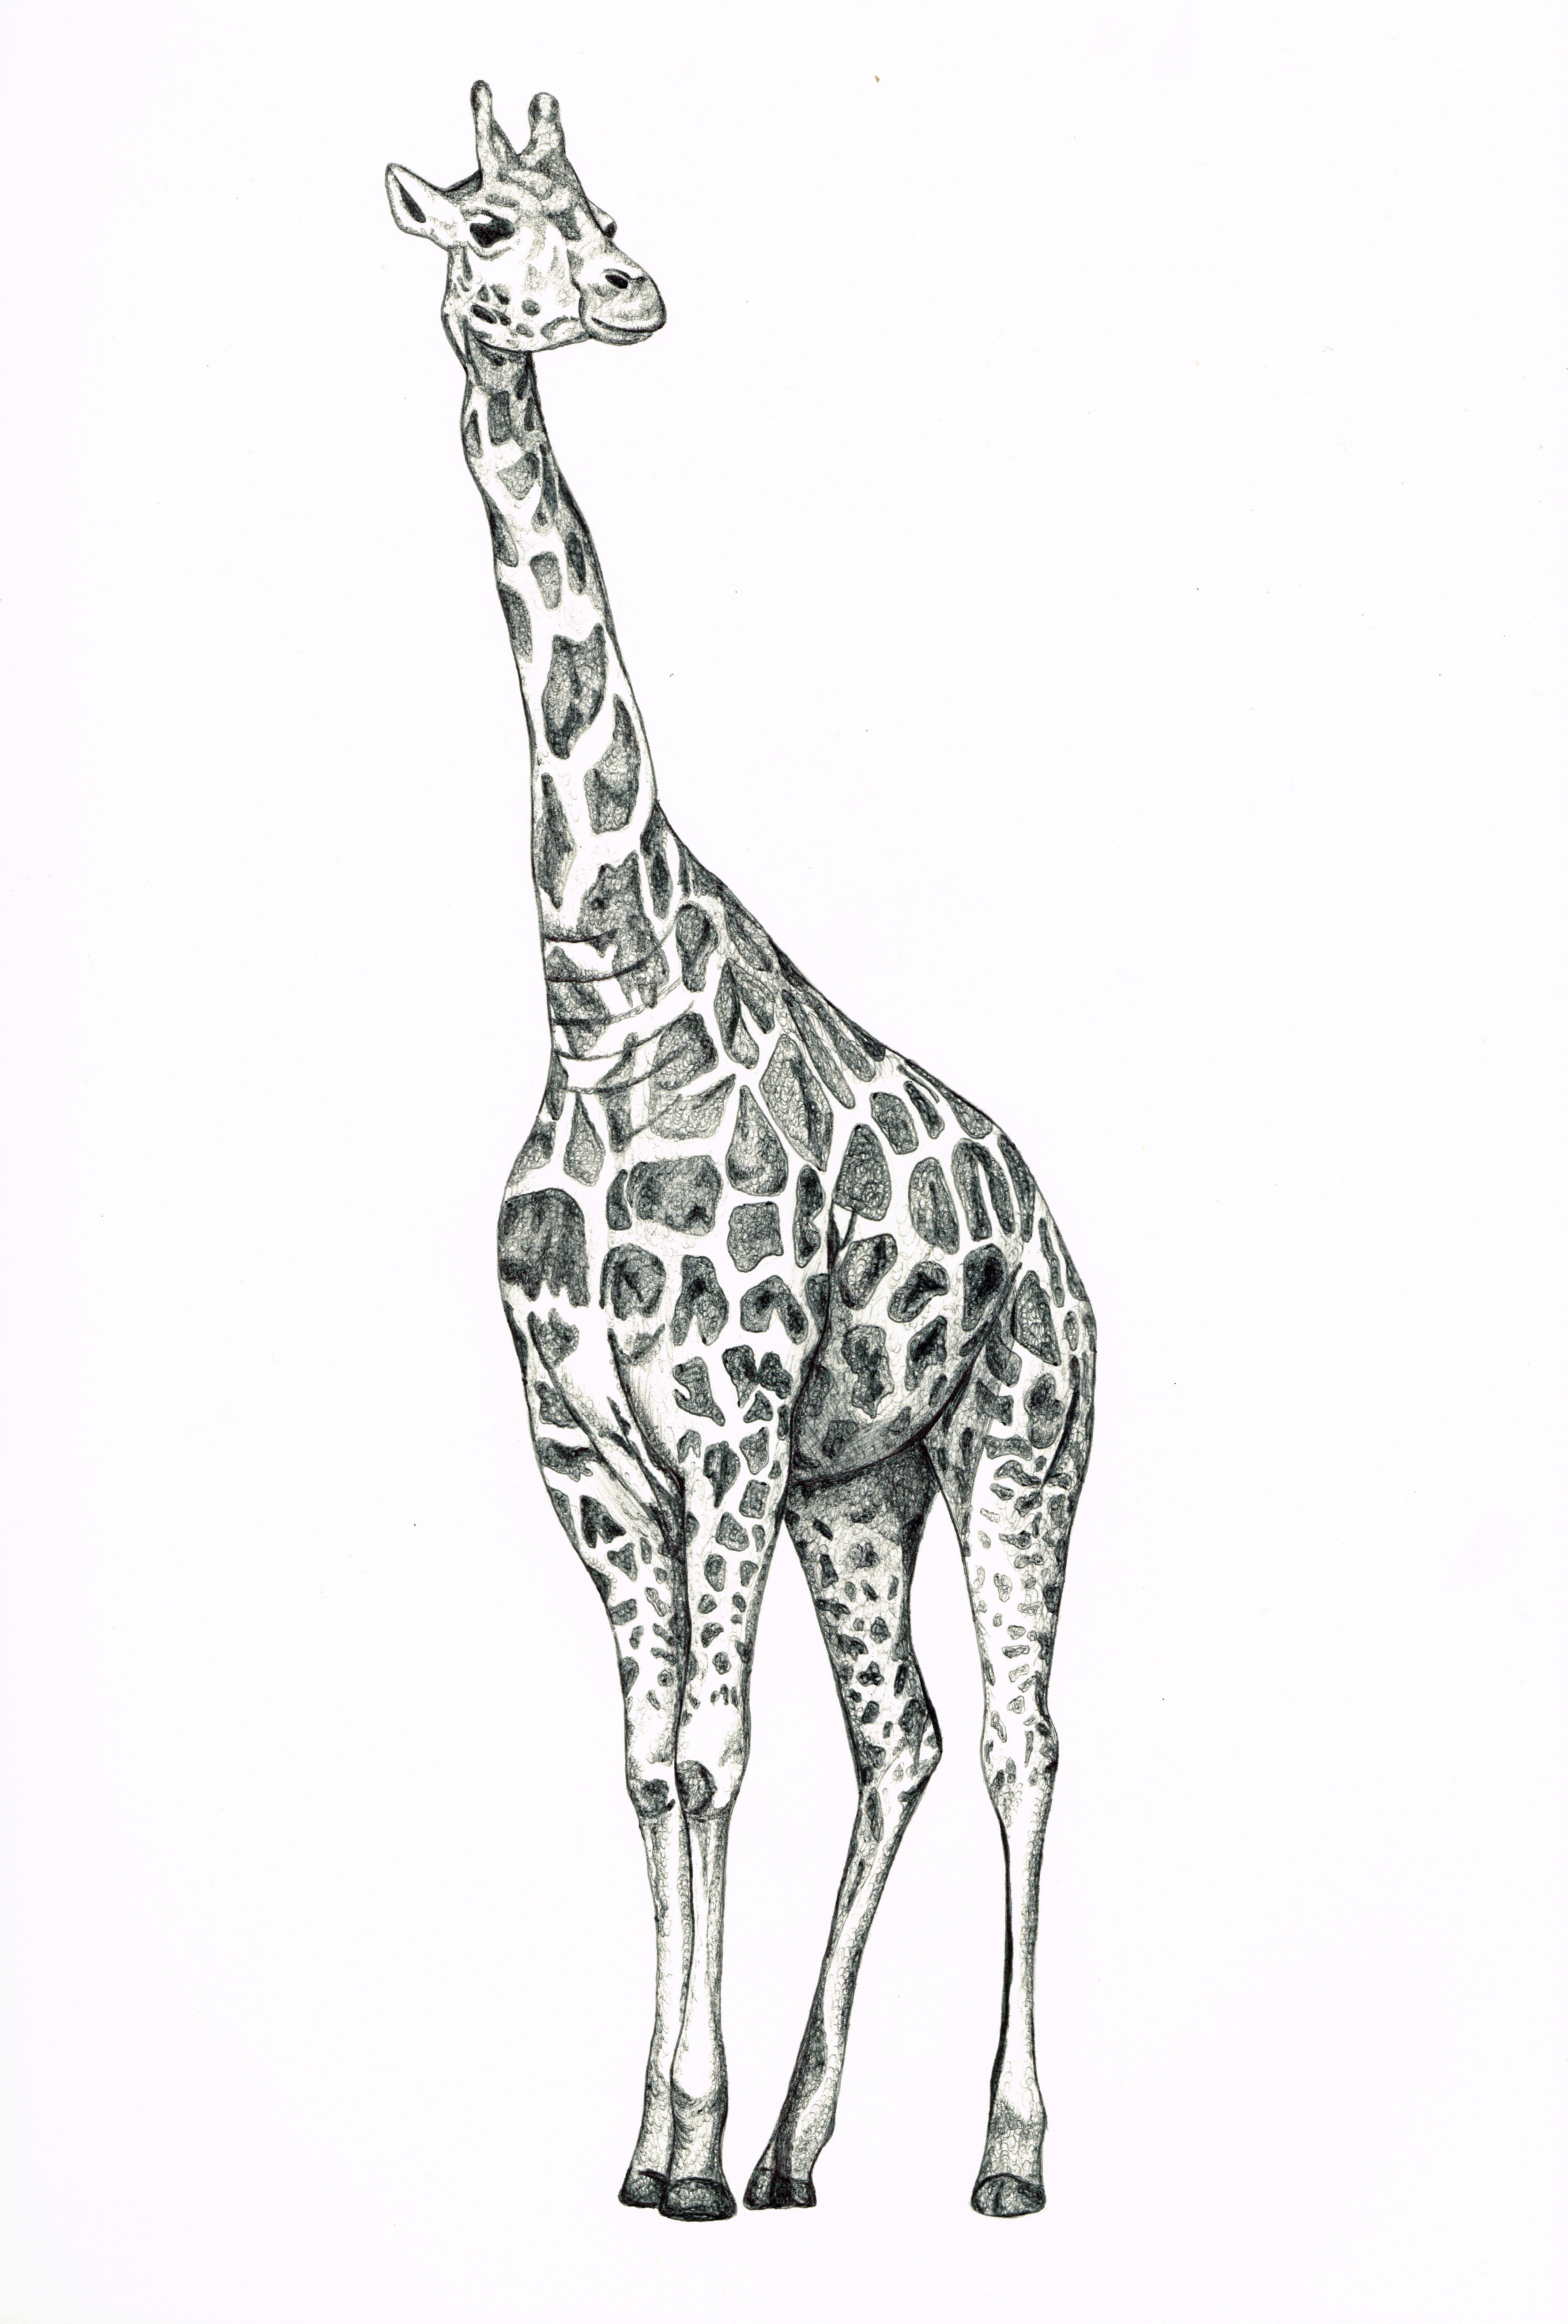 Giraffe Biro Drawing | Giraffe, Giraffe illustration and Draw